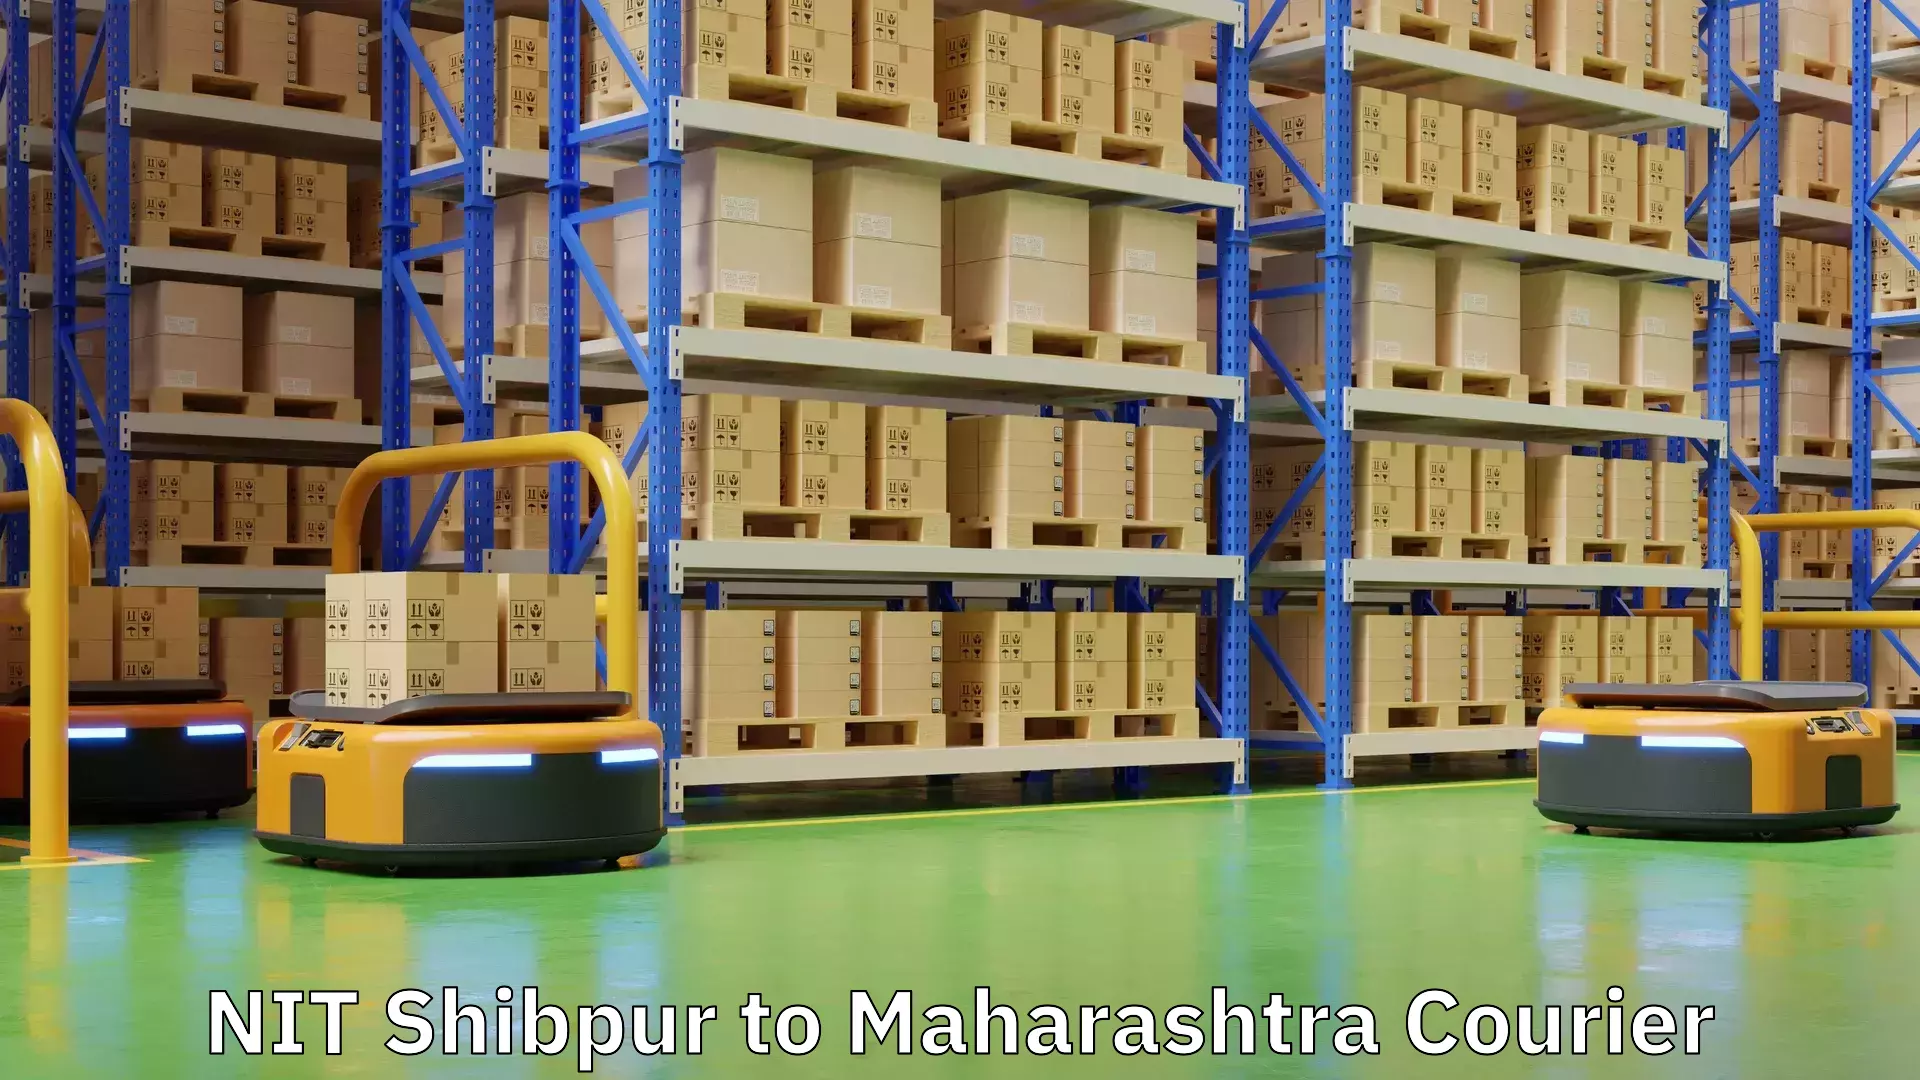 Ground shipping in NIT Shibpur to Maharashtra